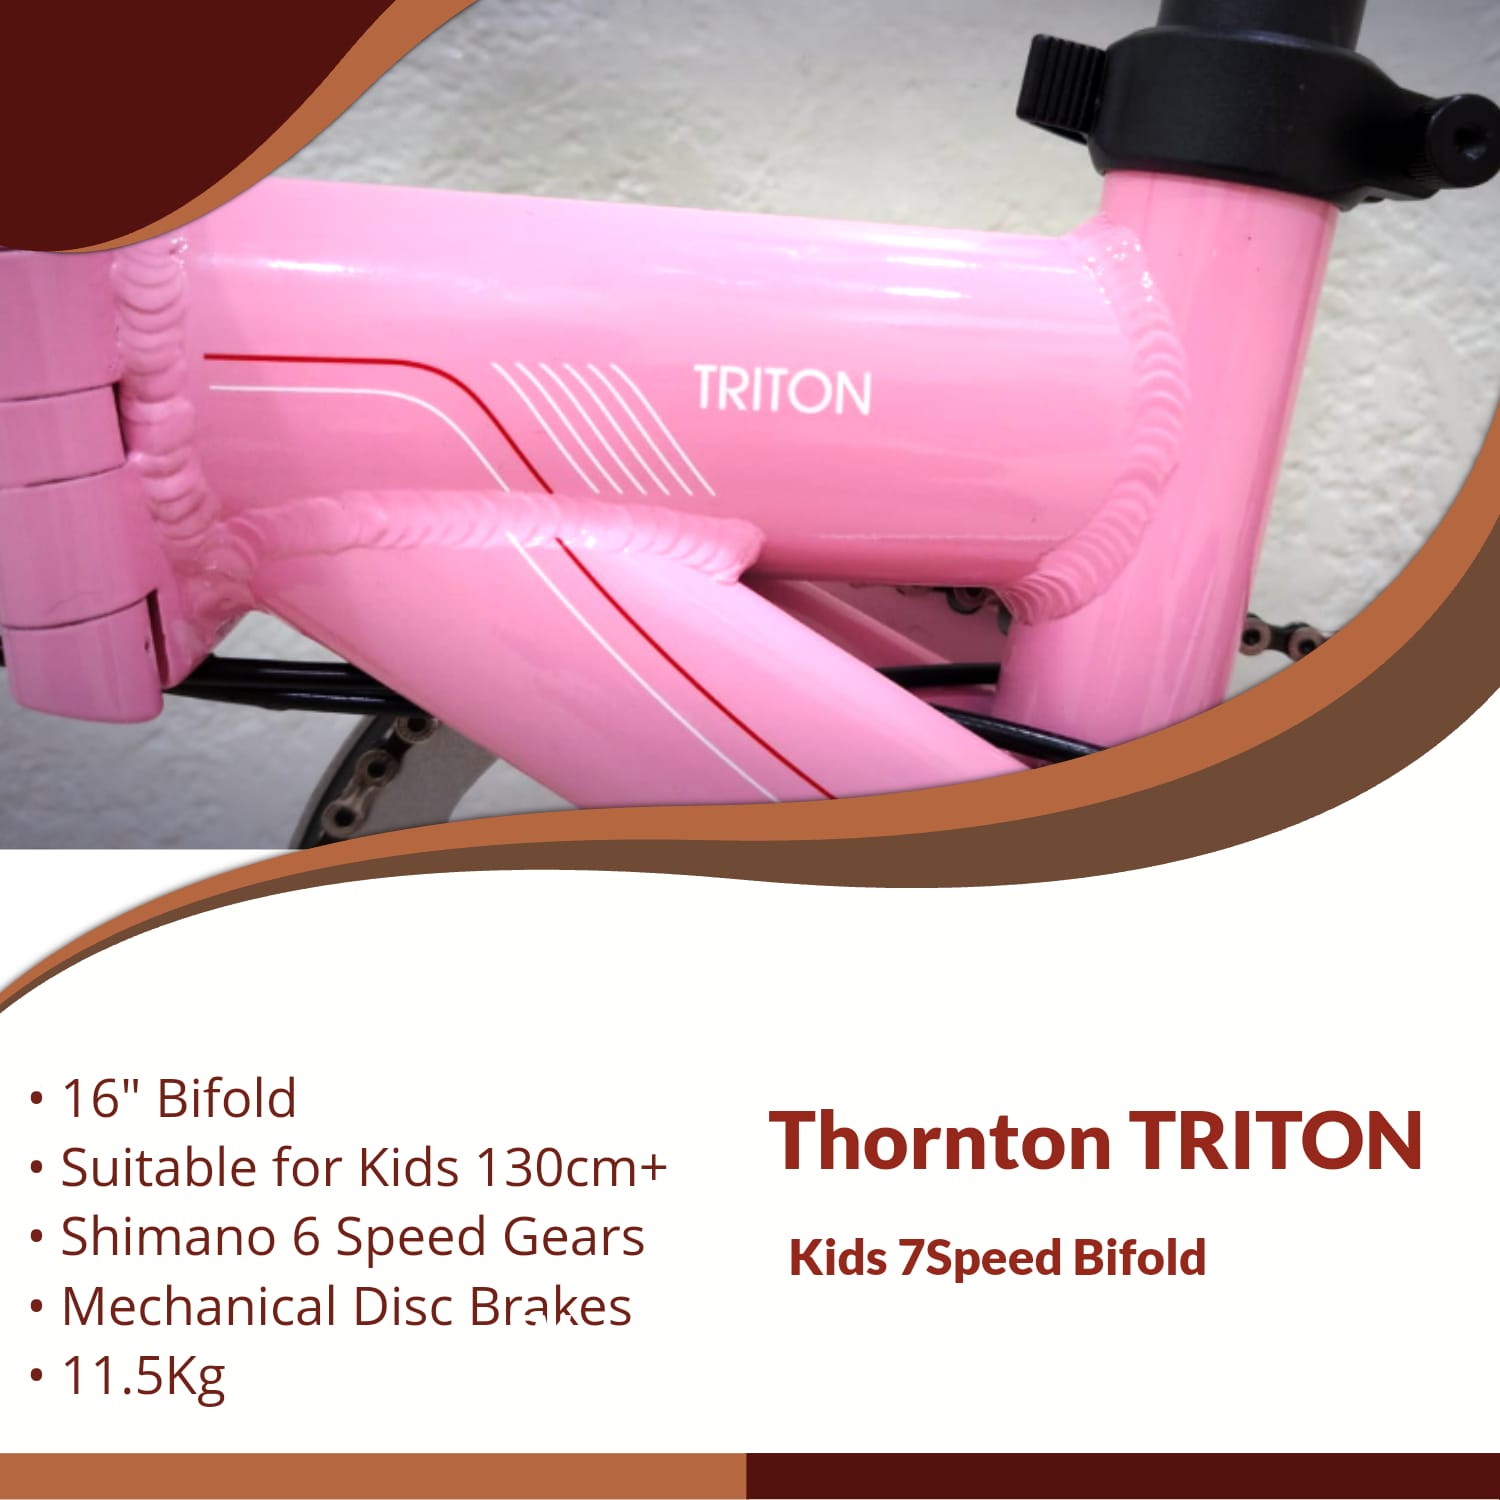 THORNTON TRITON | 16" Bifold, Mechanical | Suitable for Kids